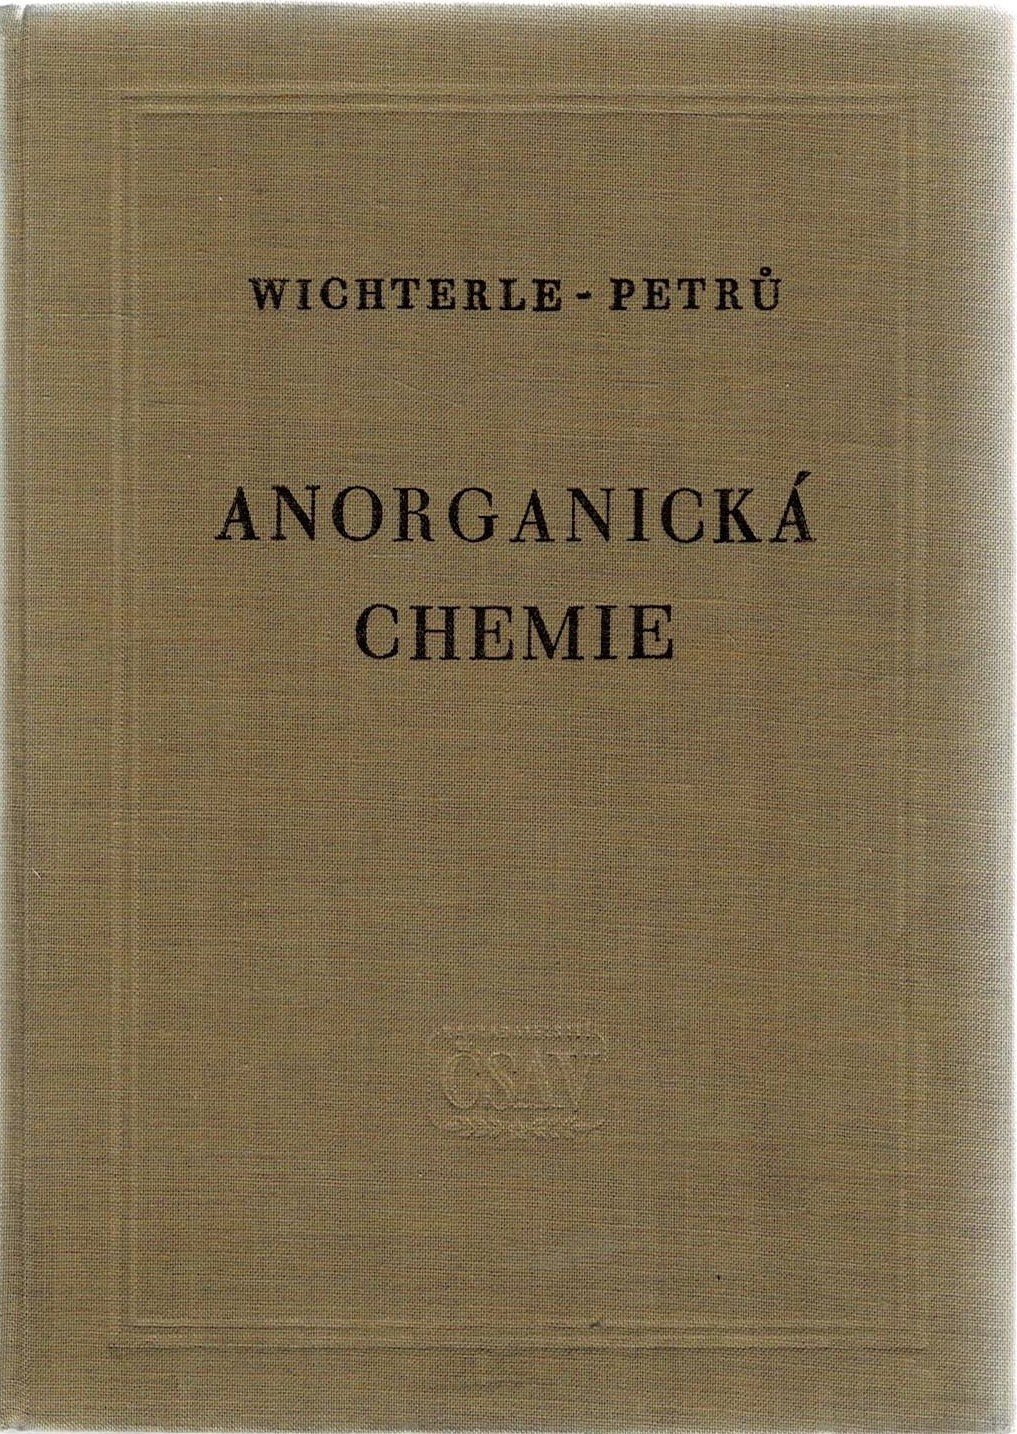 Wichterle, O., Petrů, F.: Anorganická chemie